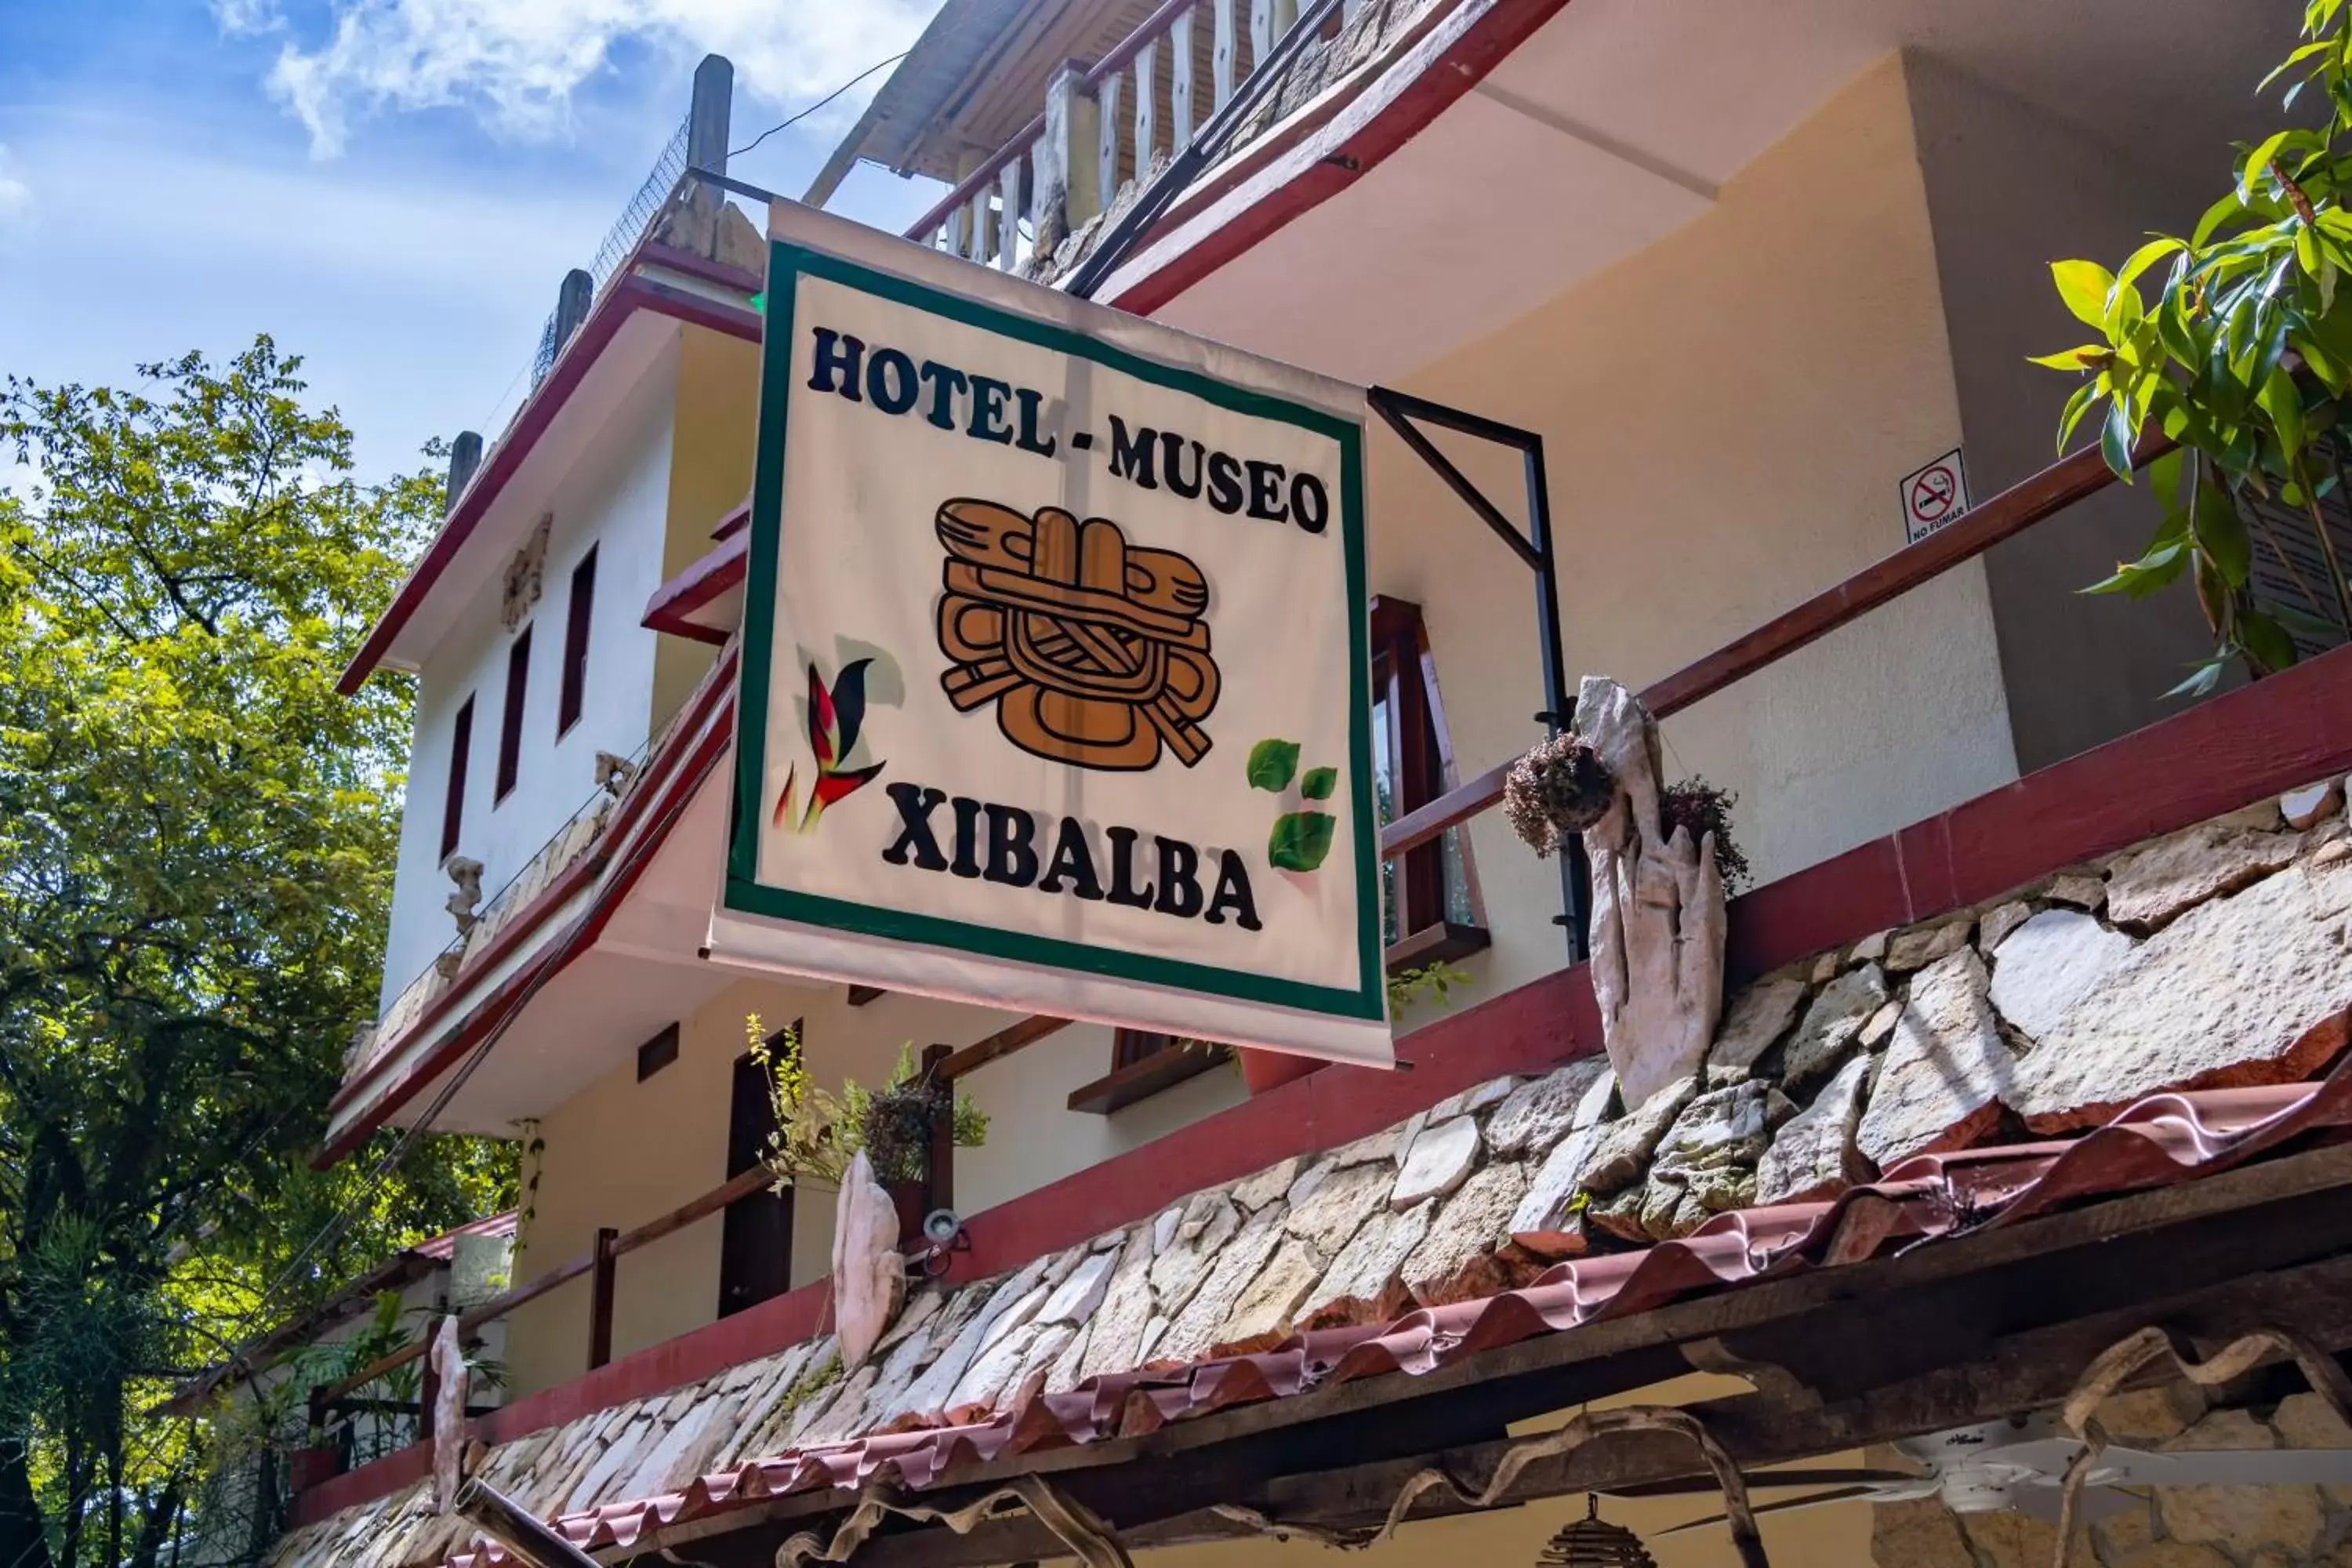 Property Logo/Sign in Hotel - Museo Xibalba